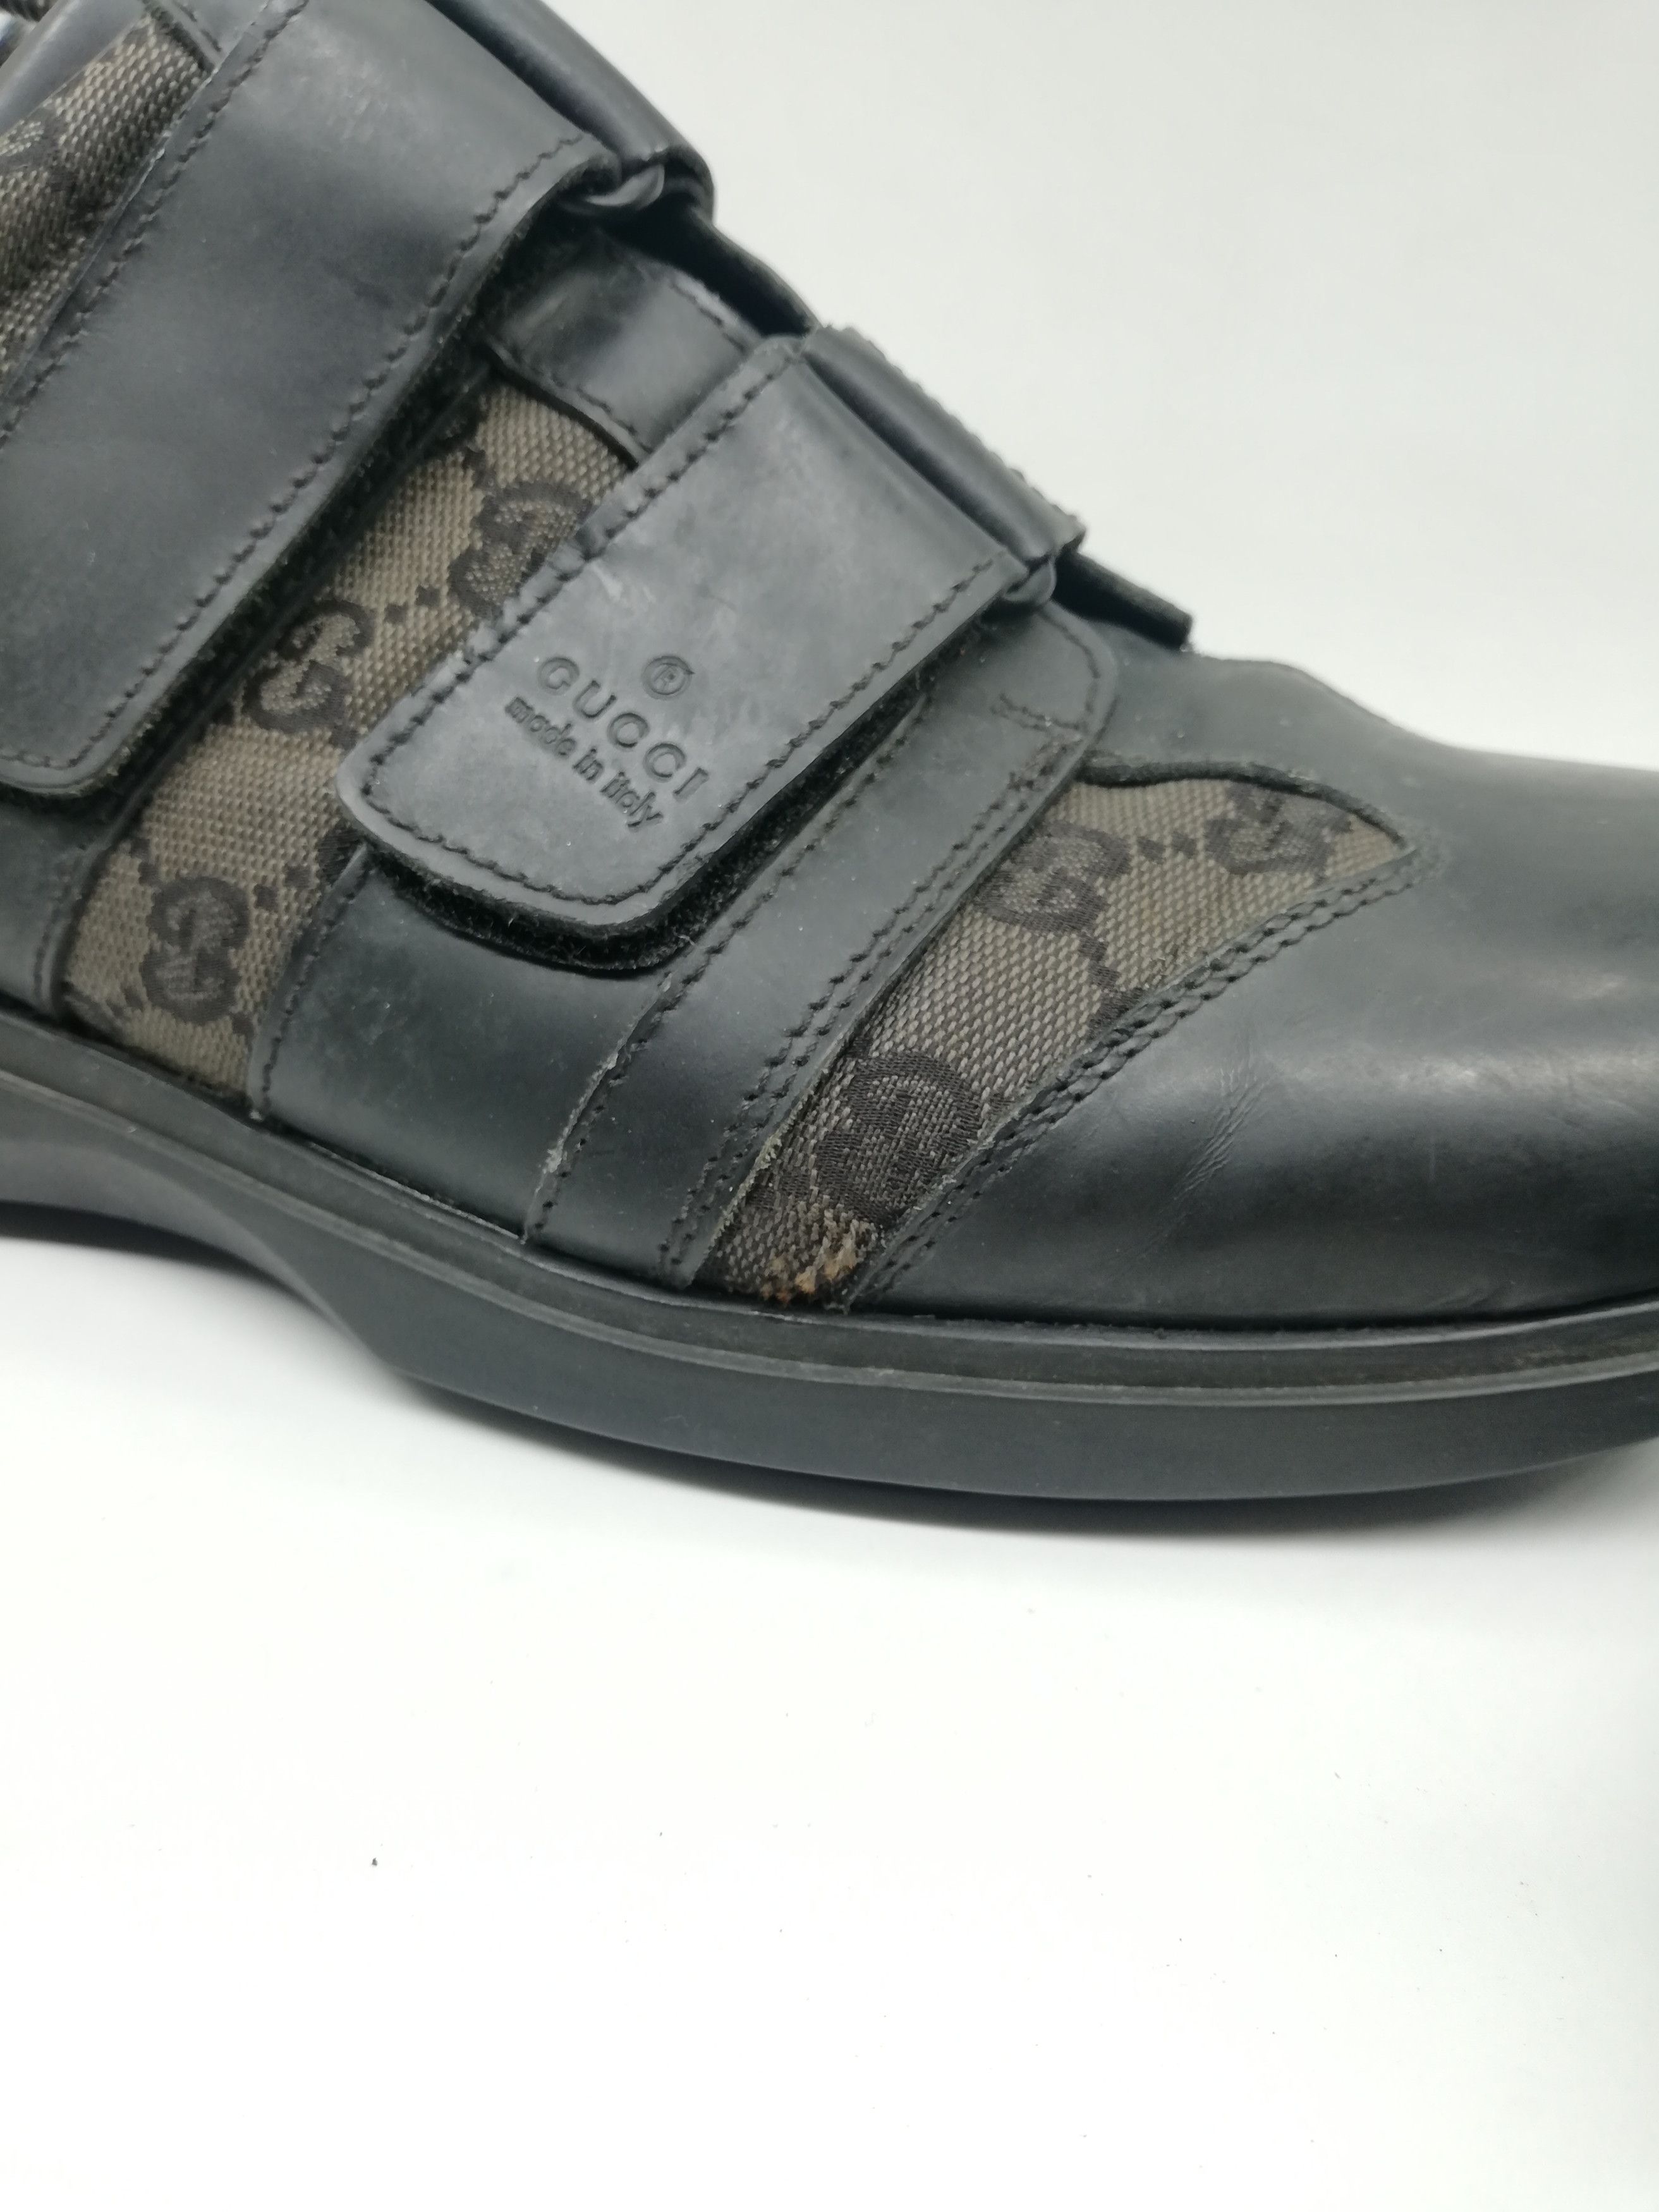 GG Black Velcro Strap Shoes - 11